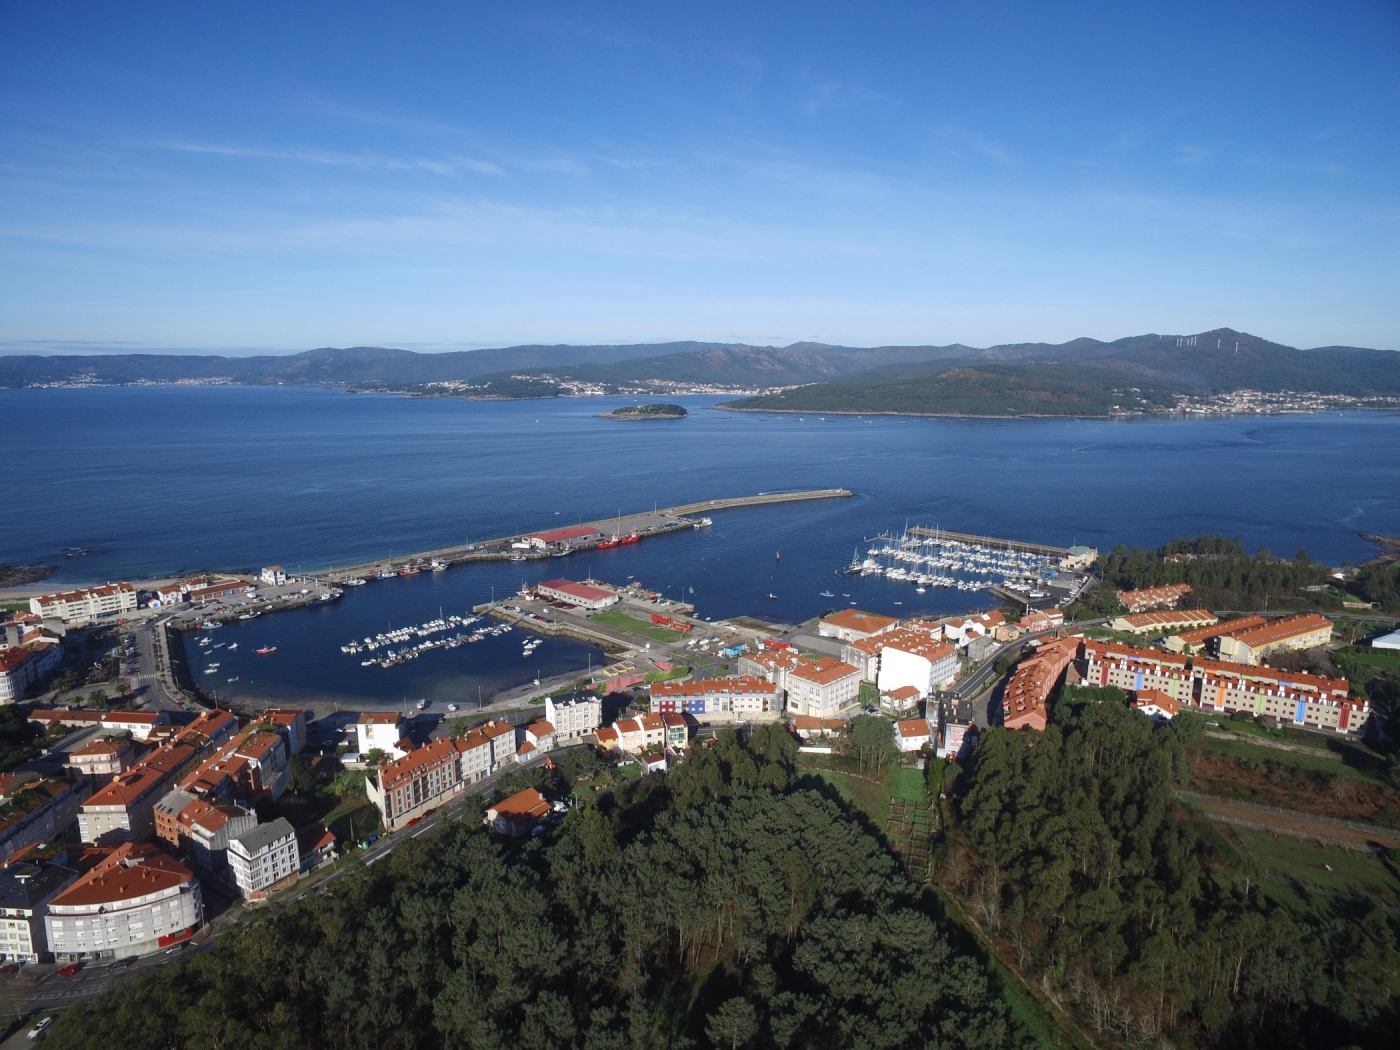 Facing the sea. Galicia in Porto do Son